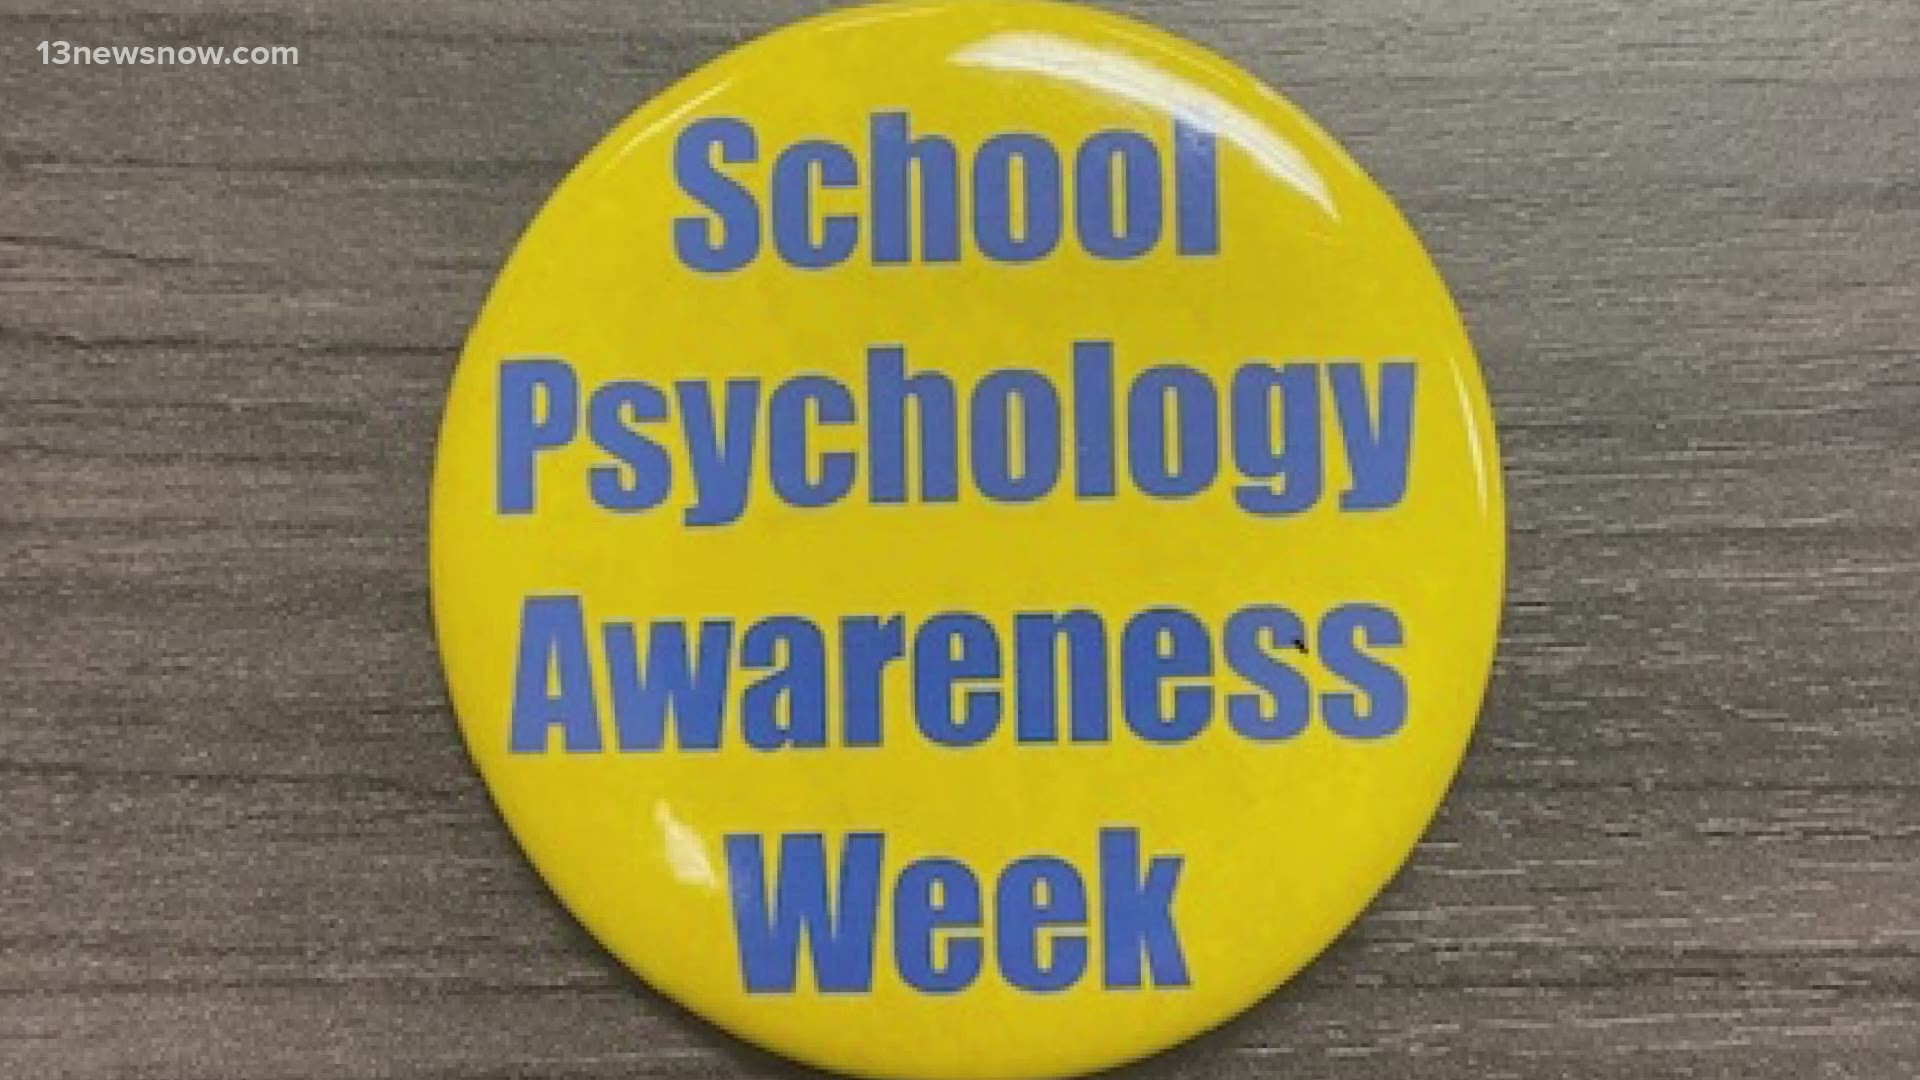 It's National School Psychology Week. School psychologists have a lot